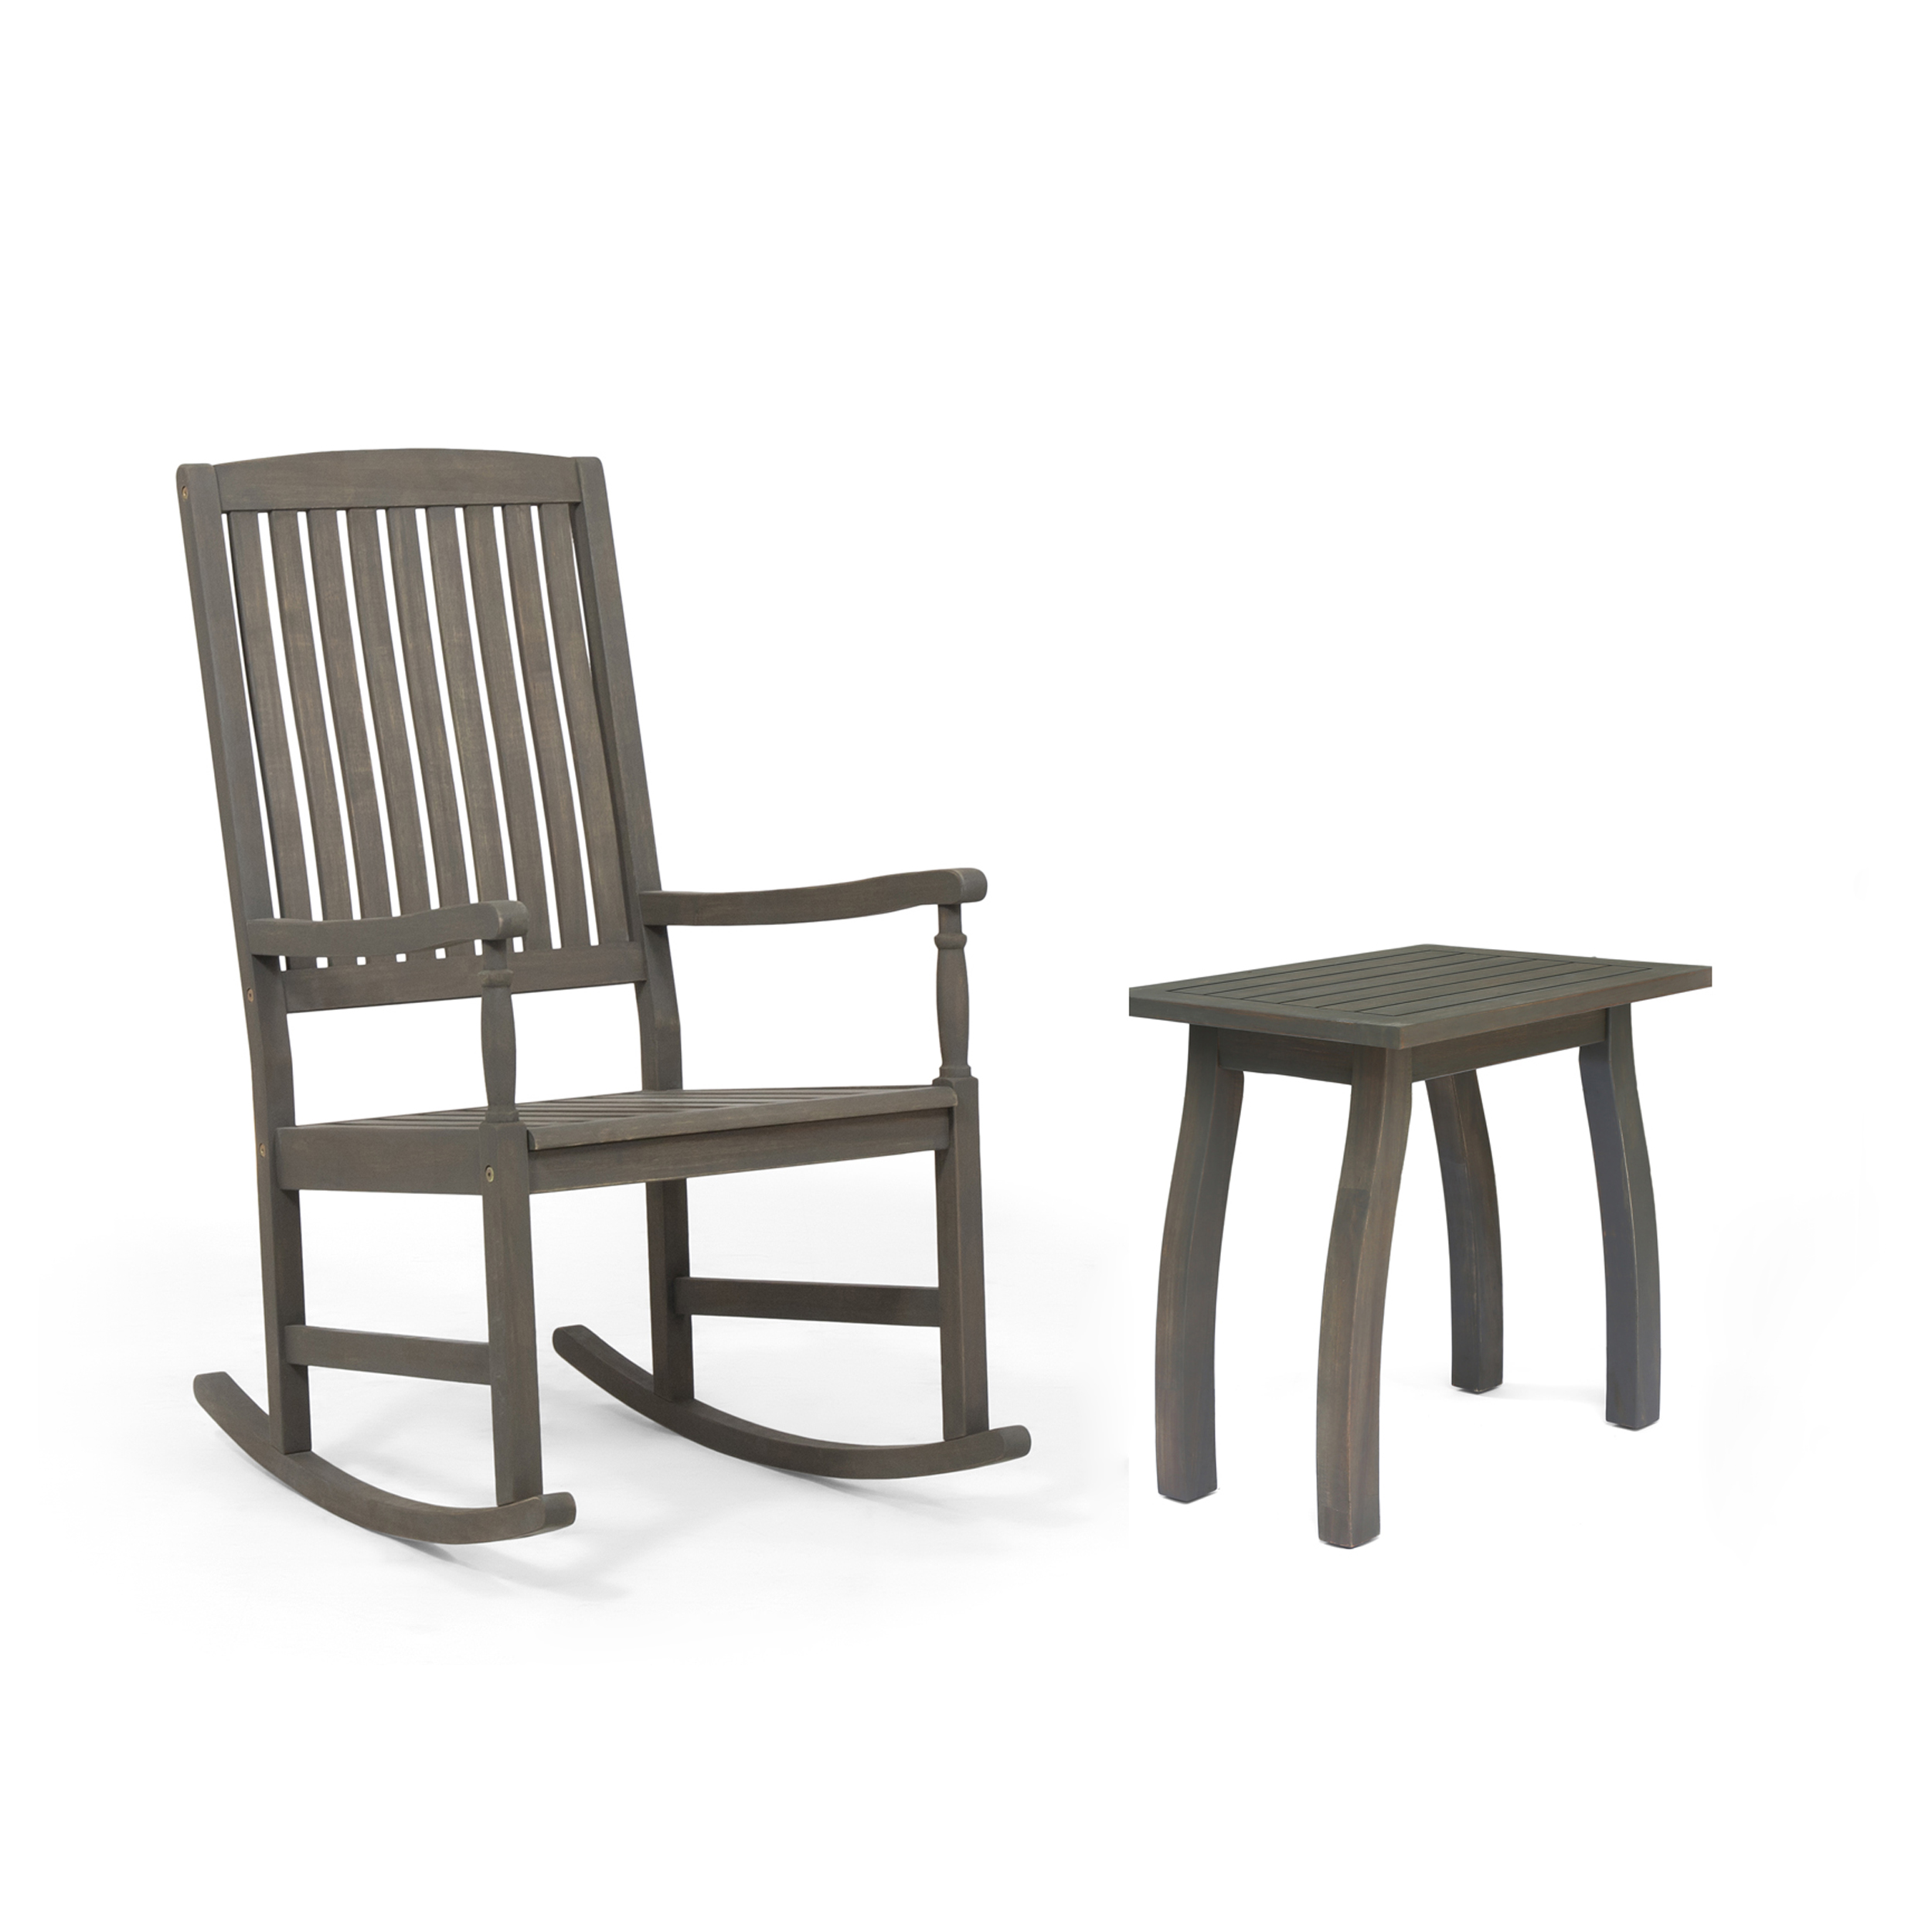 Aliya Outdoor Acacia Wood Rocking Chair and Side Table Set, Gray - image 4 of 4